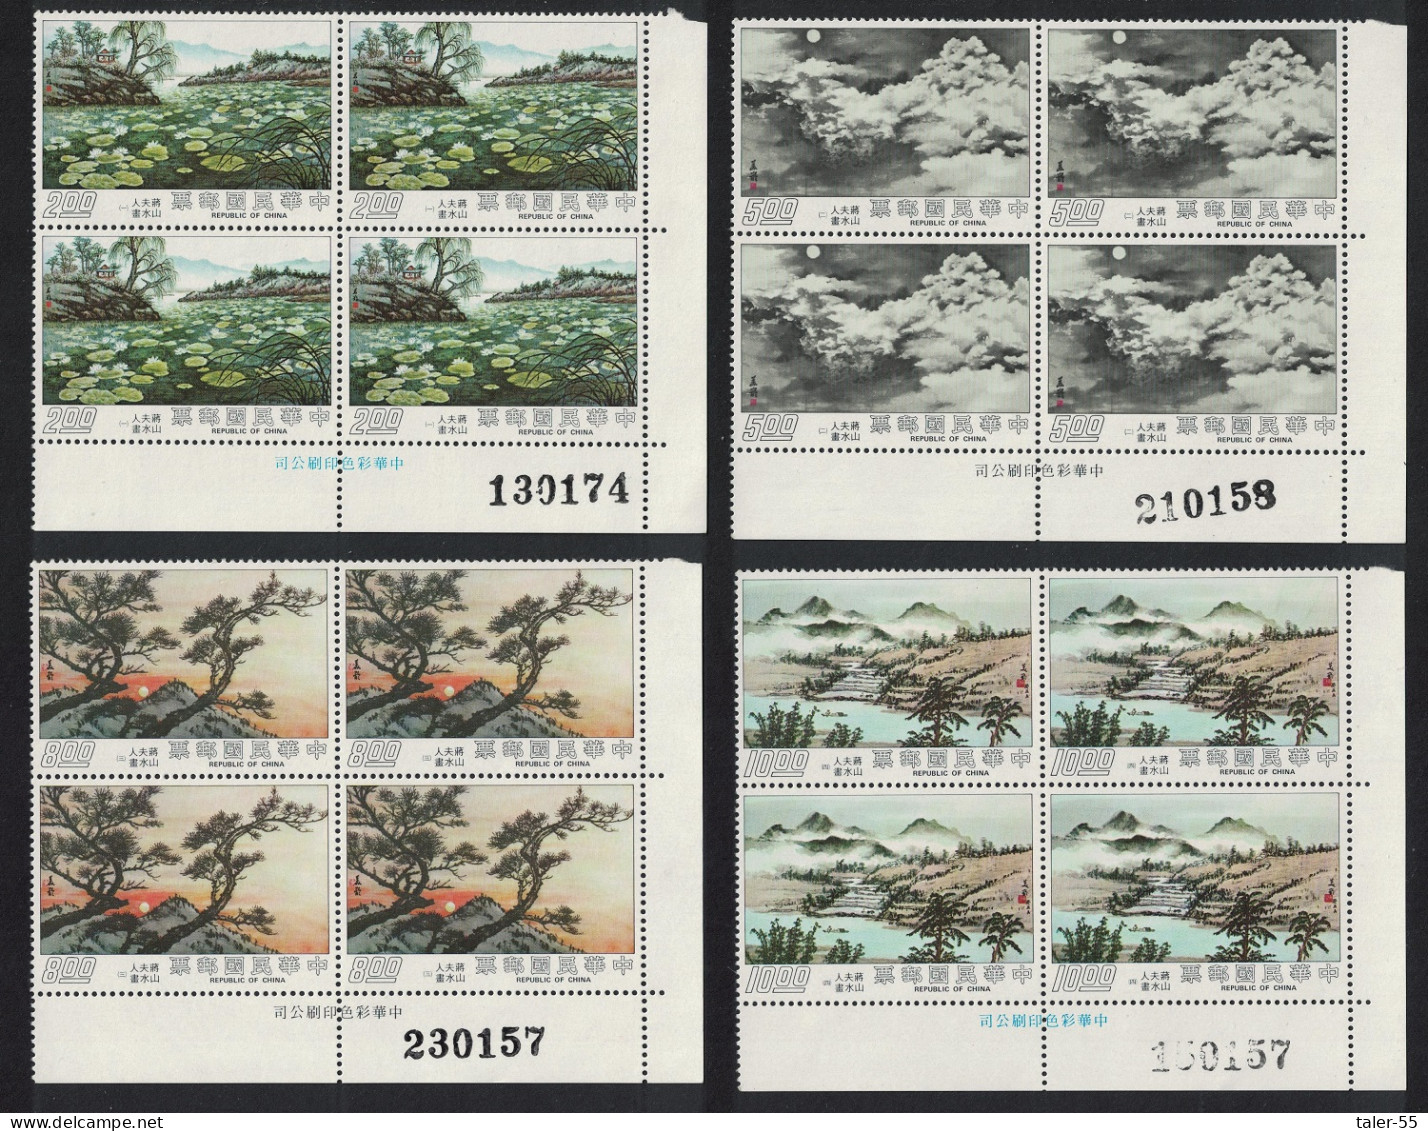 Taiwan Madame Chiang Kai-shek's Paintings 4v Corner Blocks Of 4 1975 MNH SG#1078-1081 - Ongebruikt